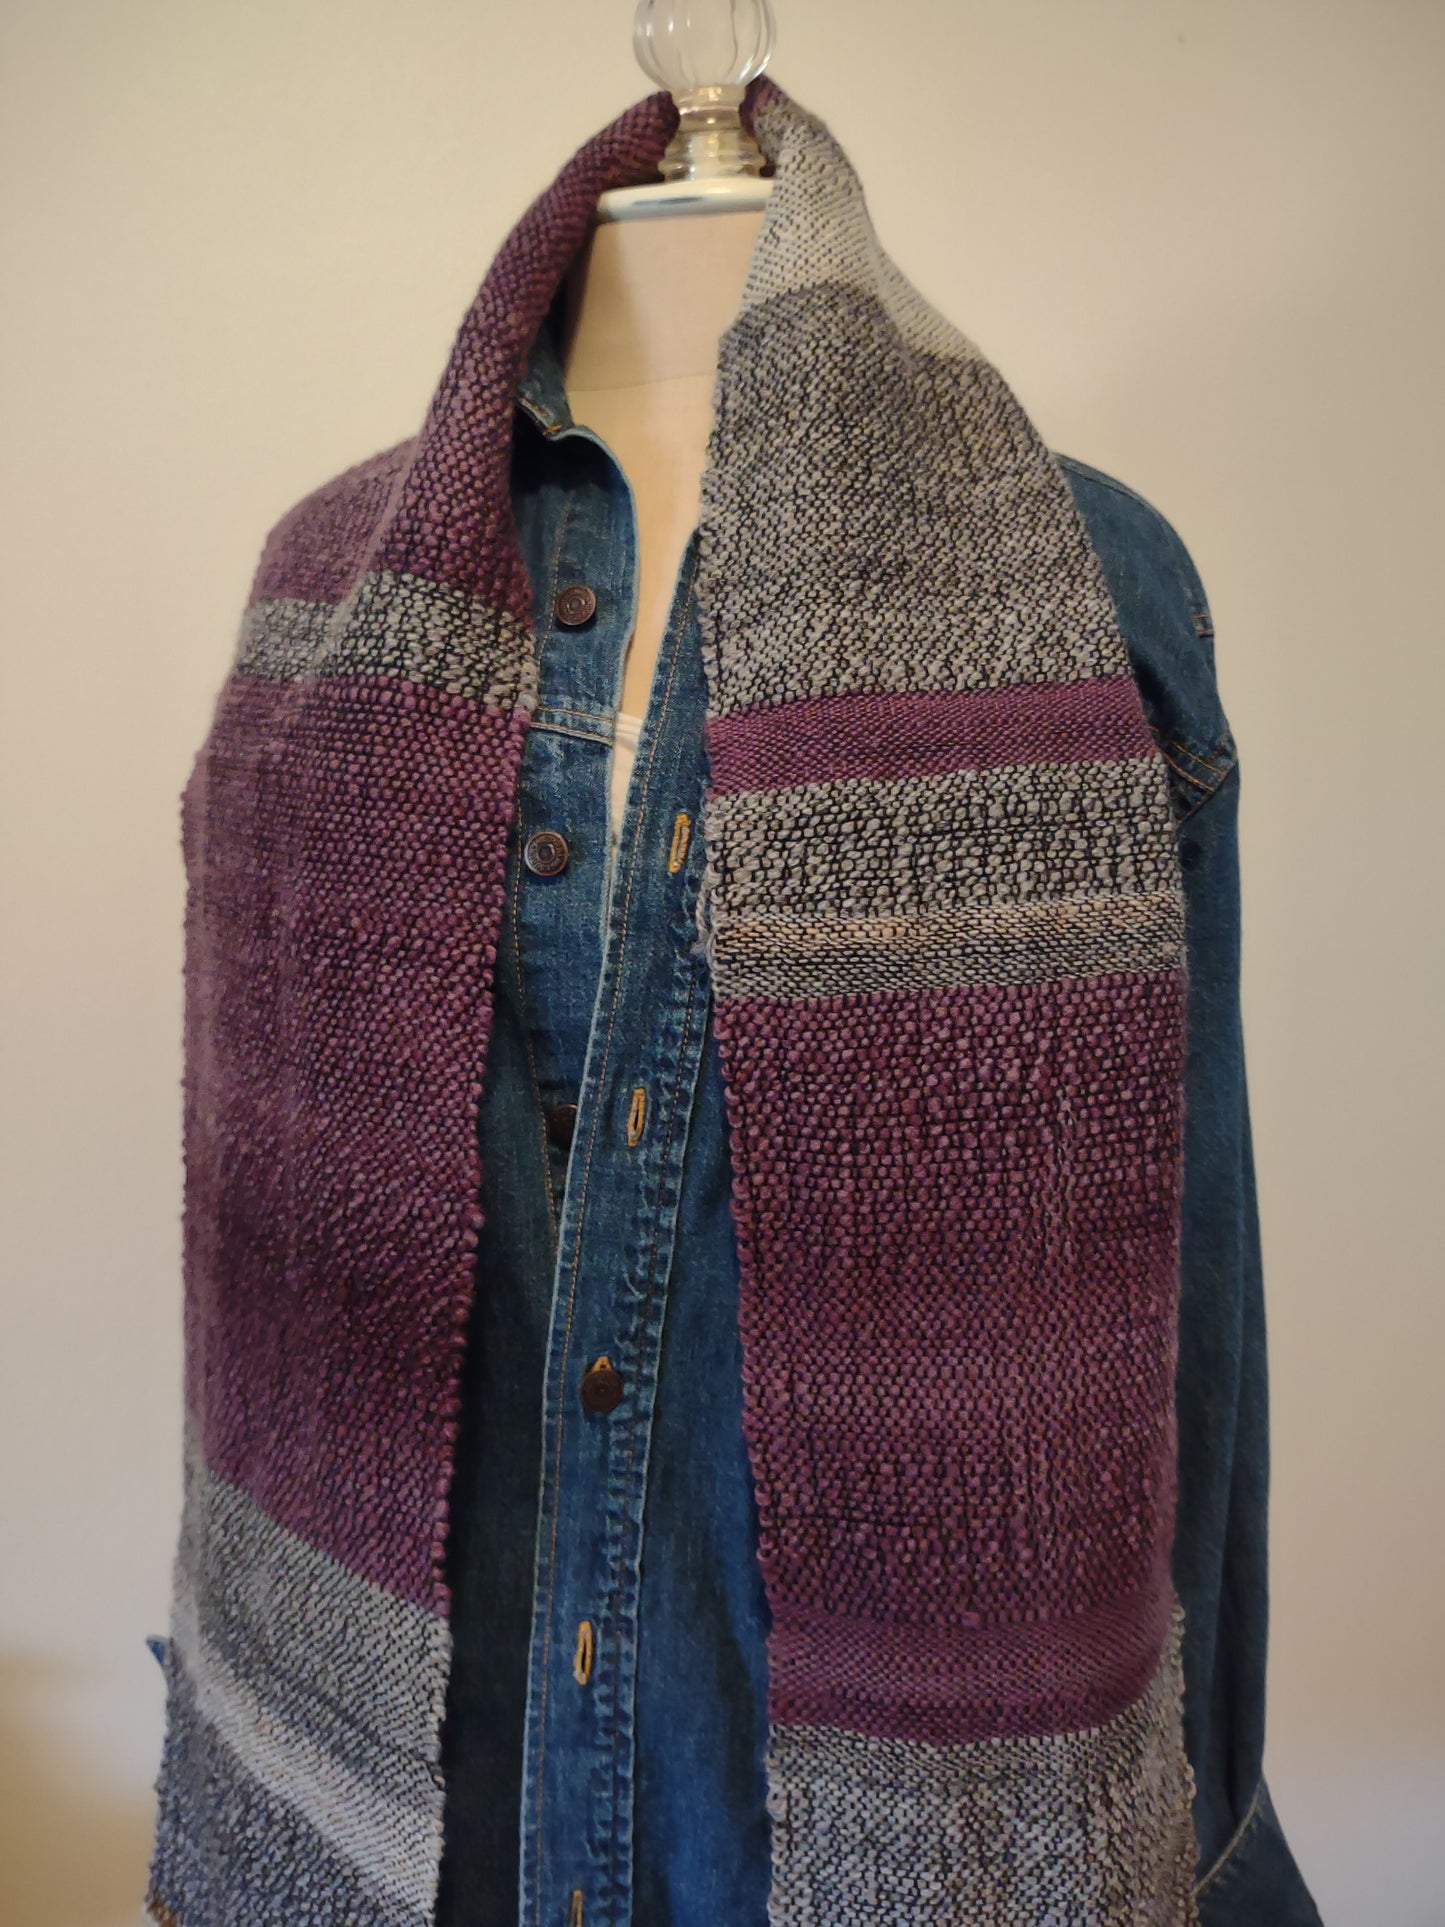 "Lavender Mist" -  Handspun wool scarf with Merino and Alpaca